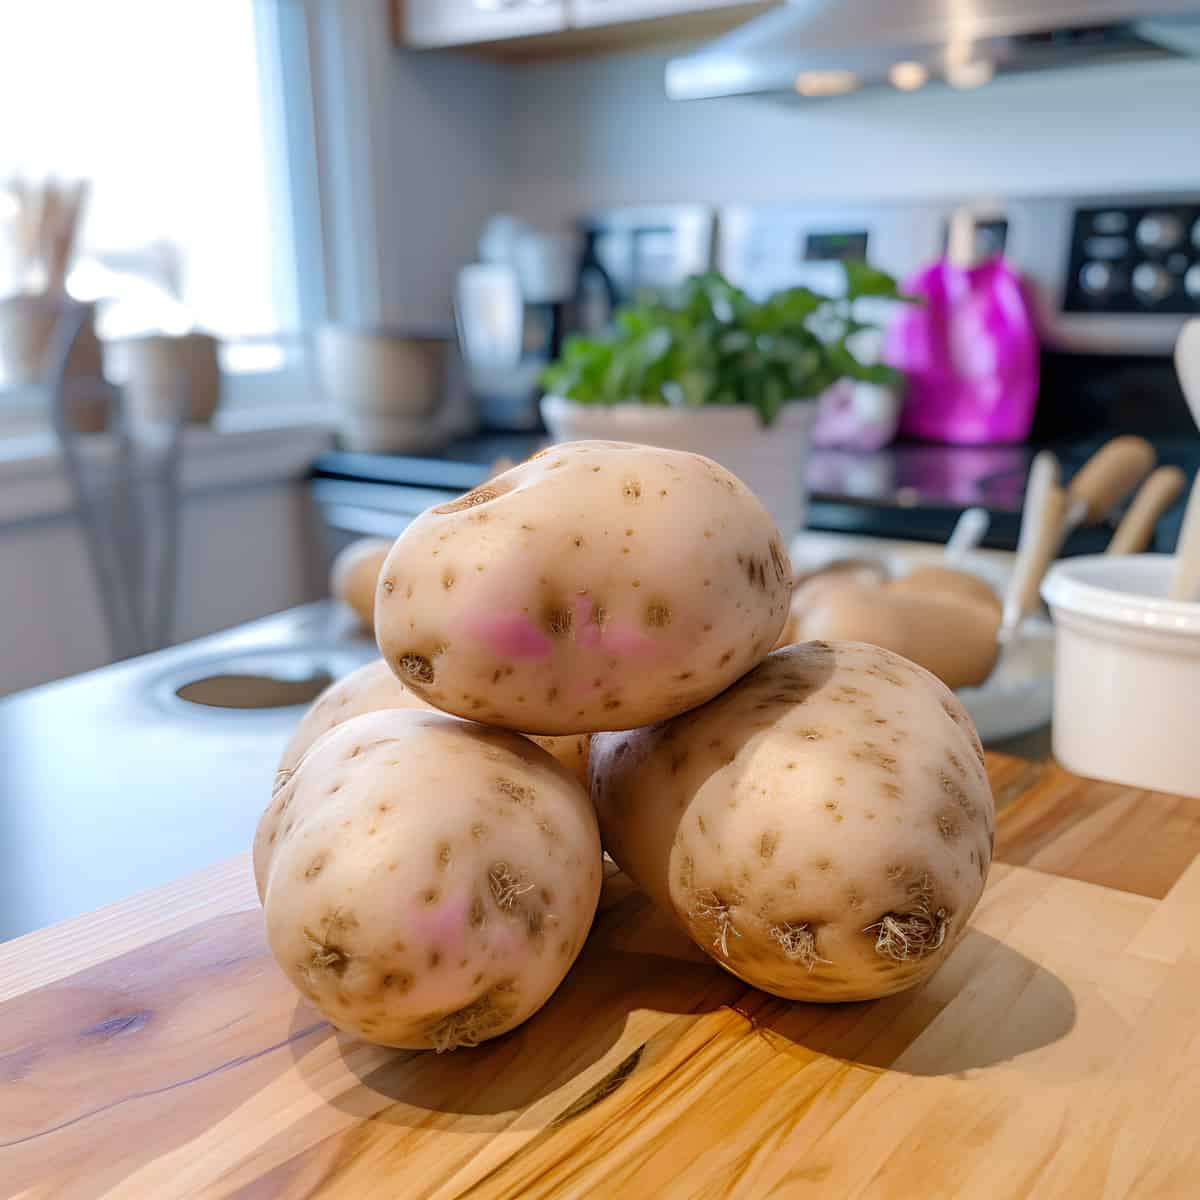 Cara Potatoes on a kitchen counter